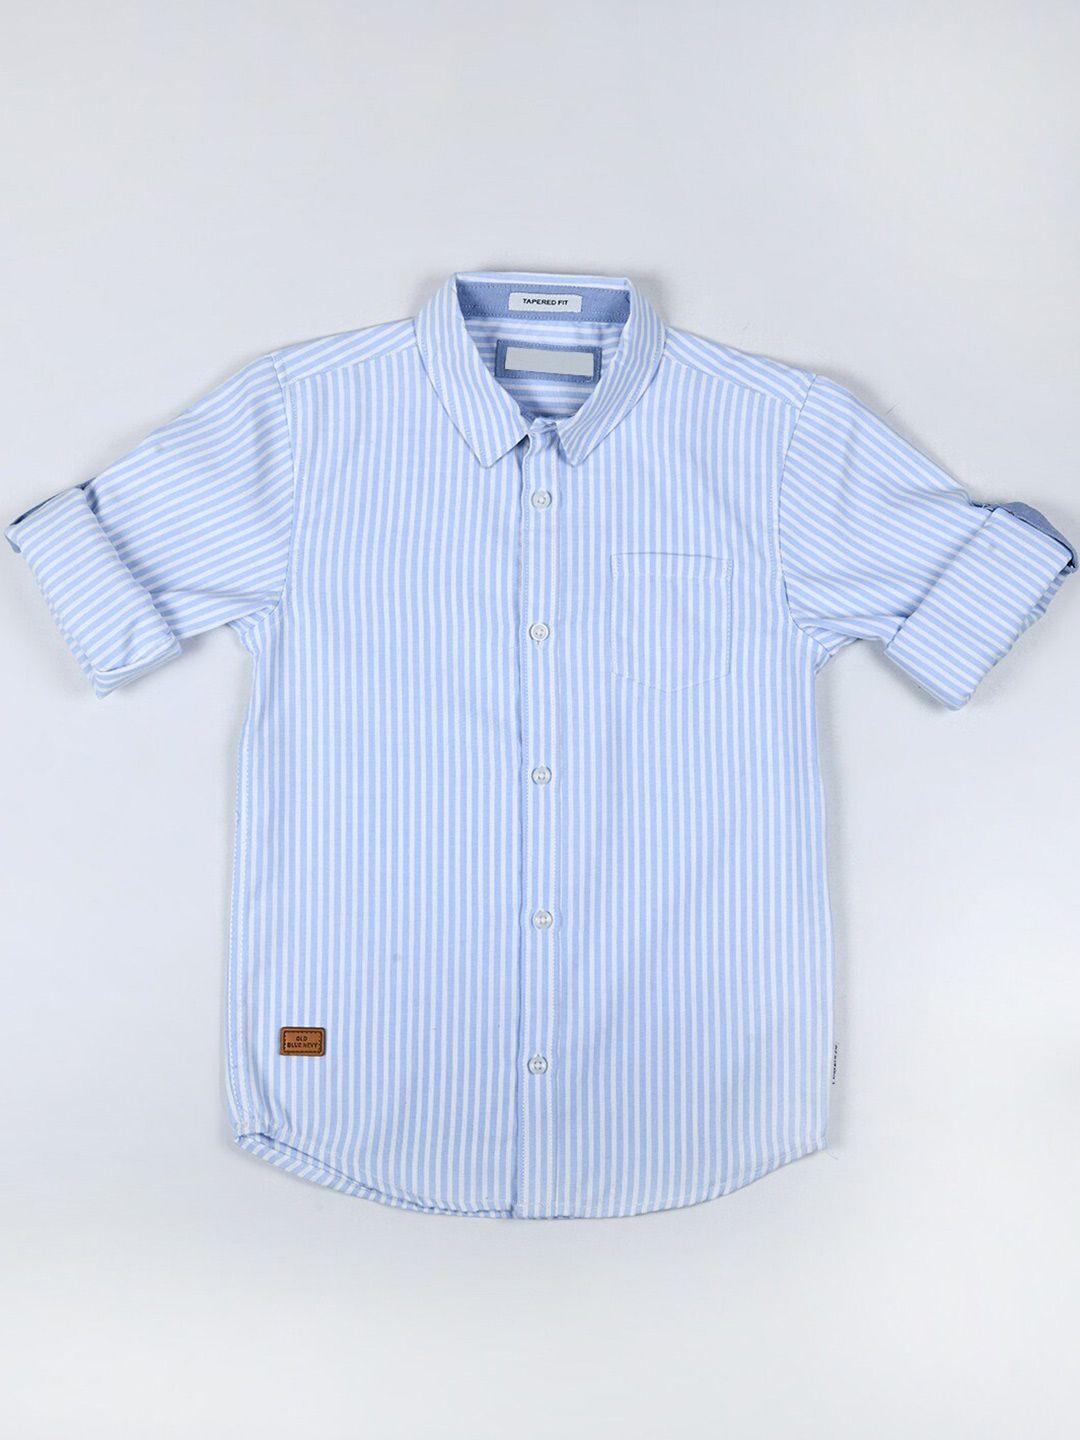 bella-moda-boys-comfort-striped-casual-cotton-shirt